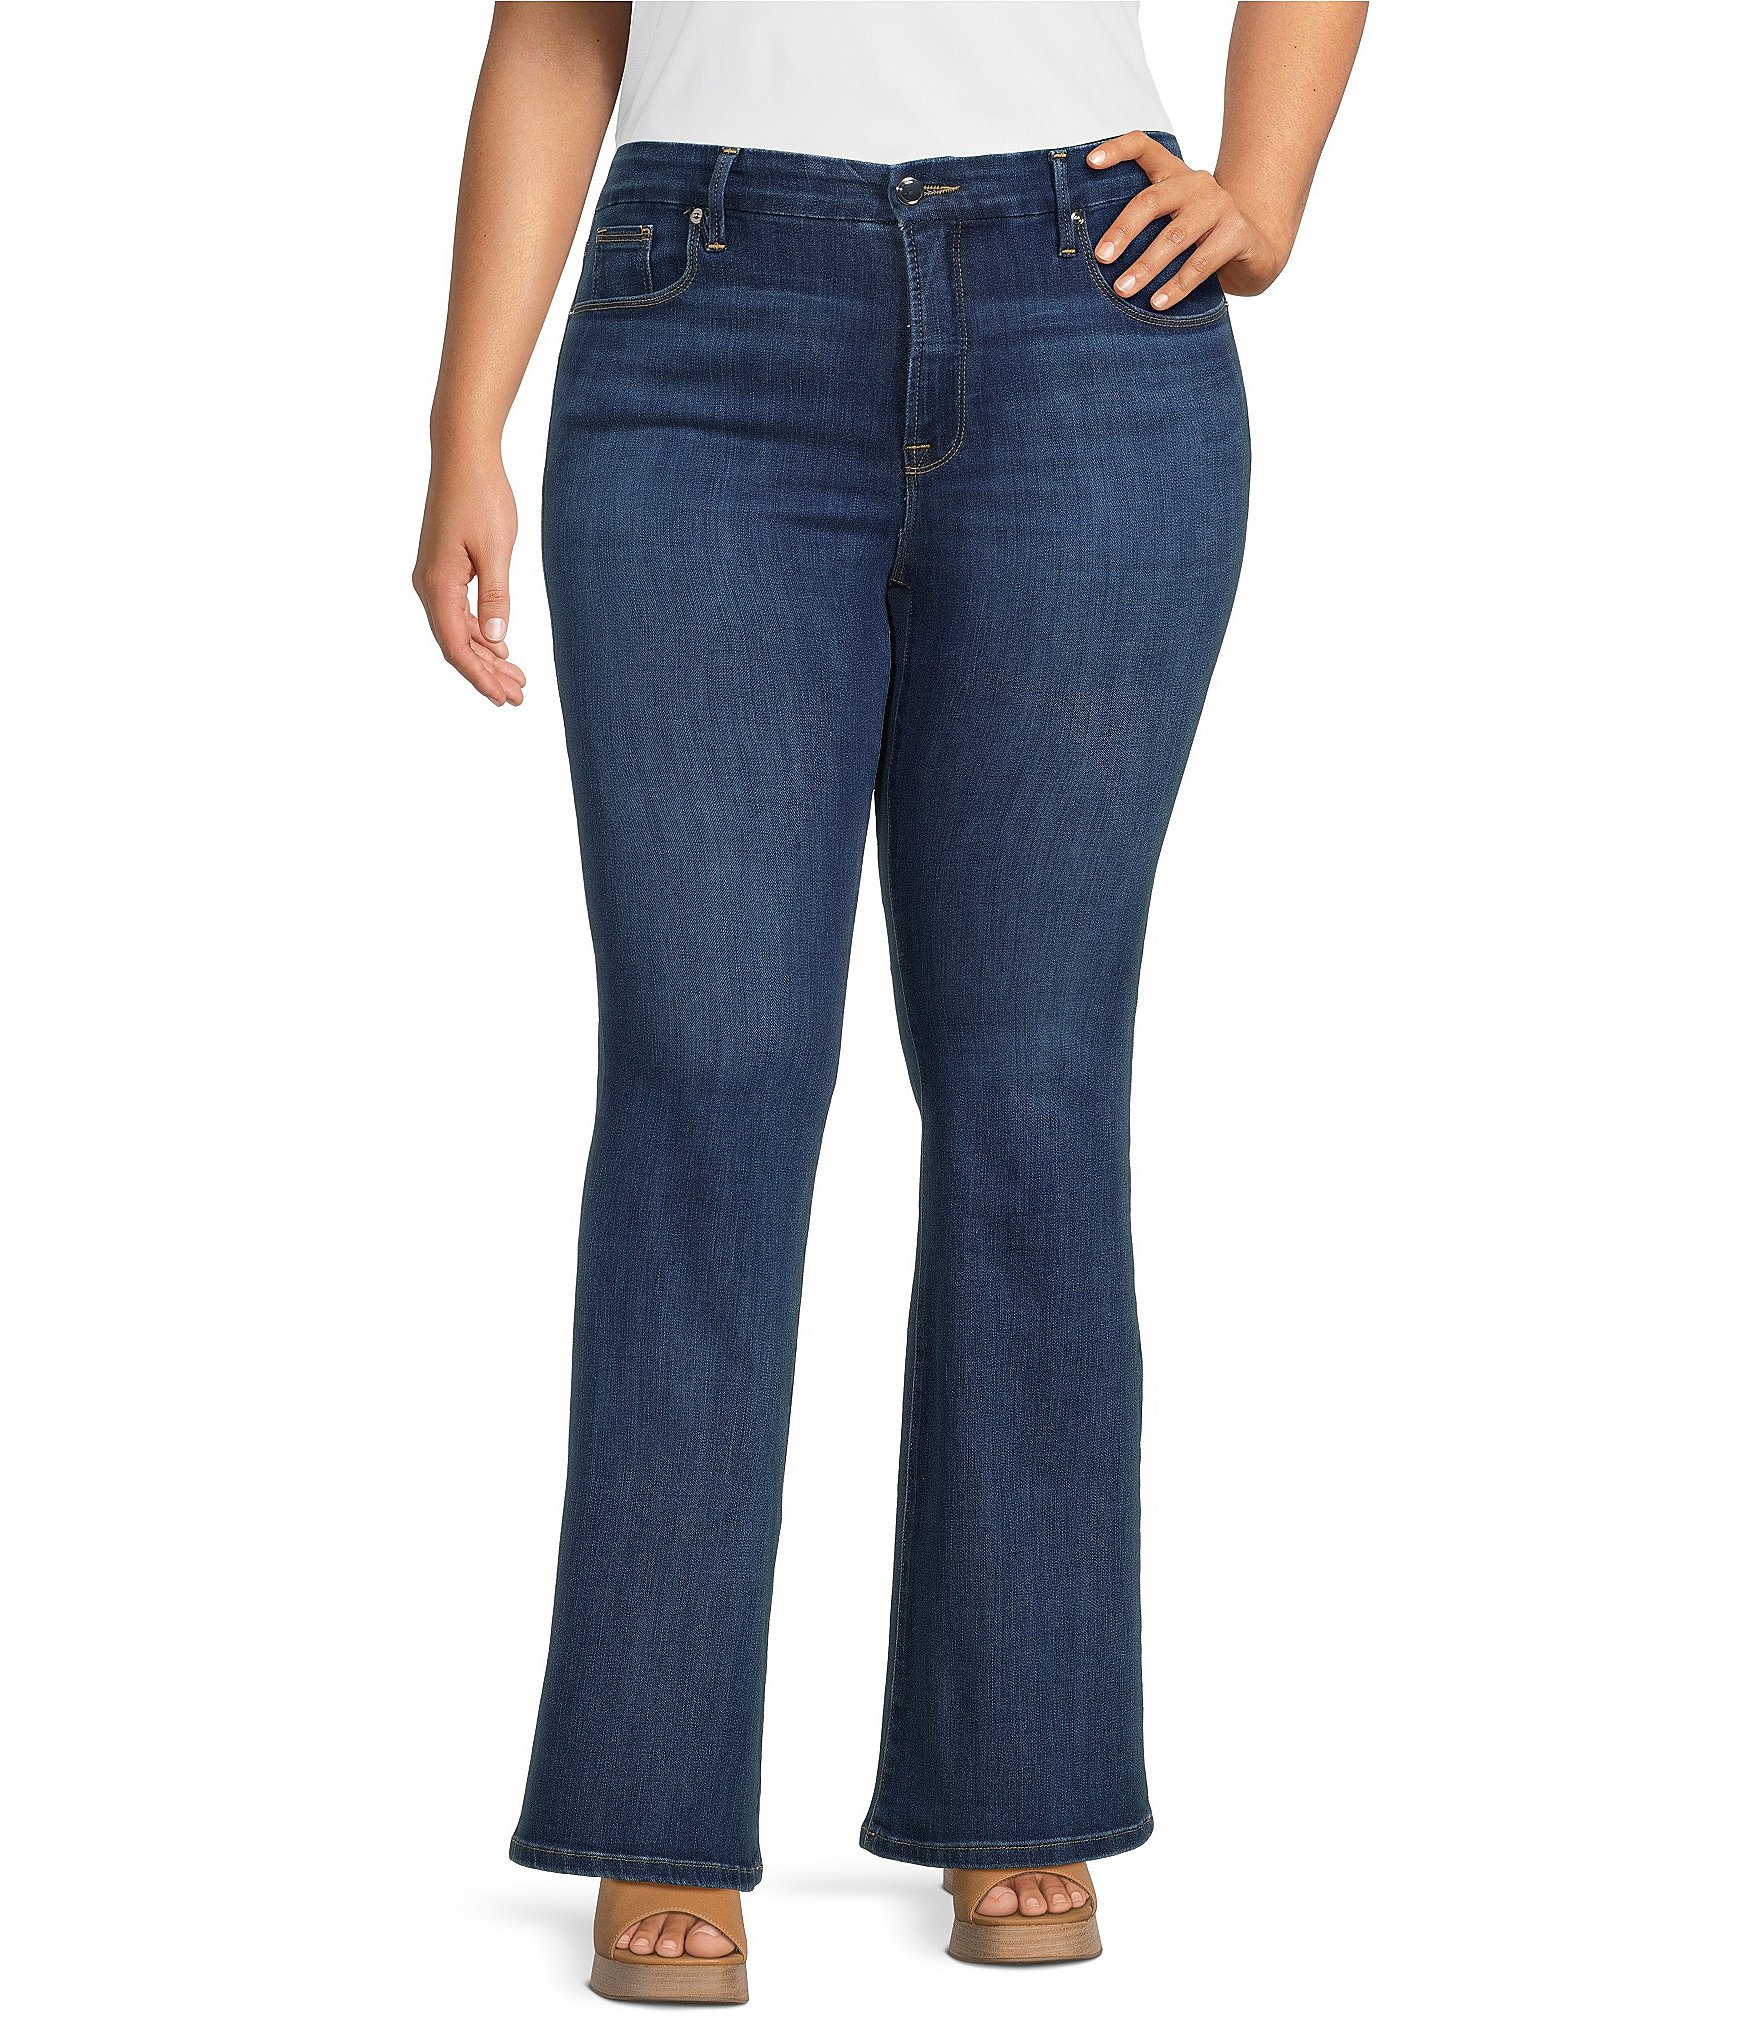 Flare Plus-Size Jeans & Denim | Dillard's